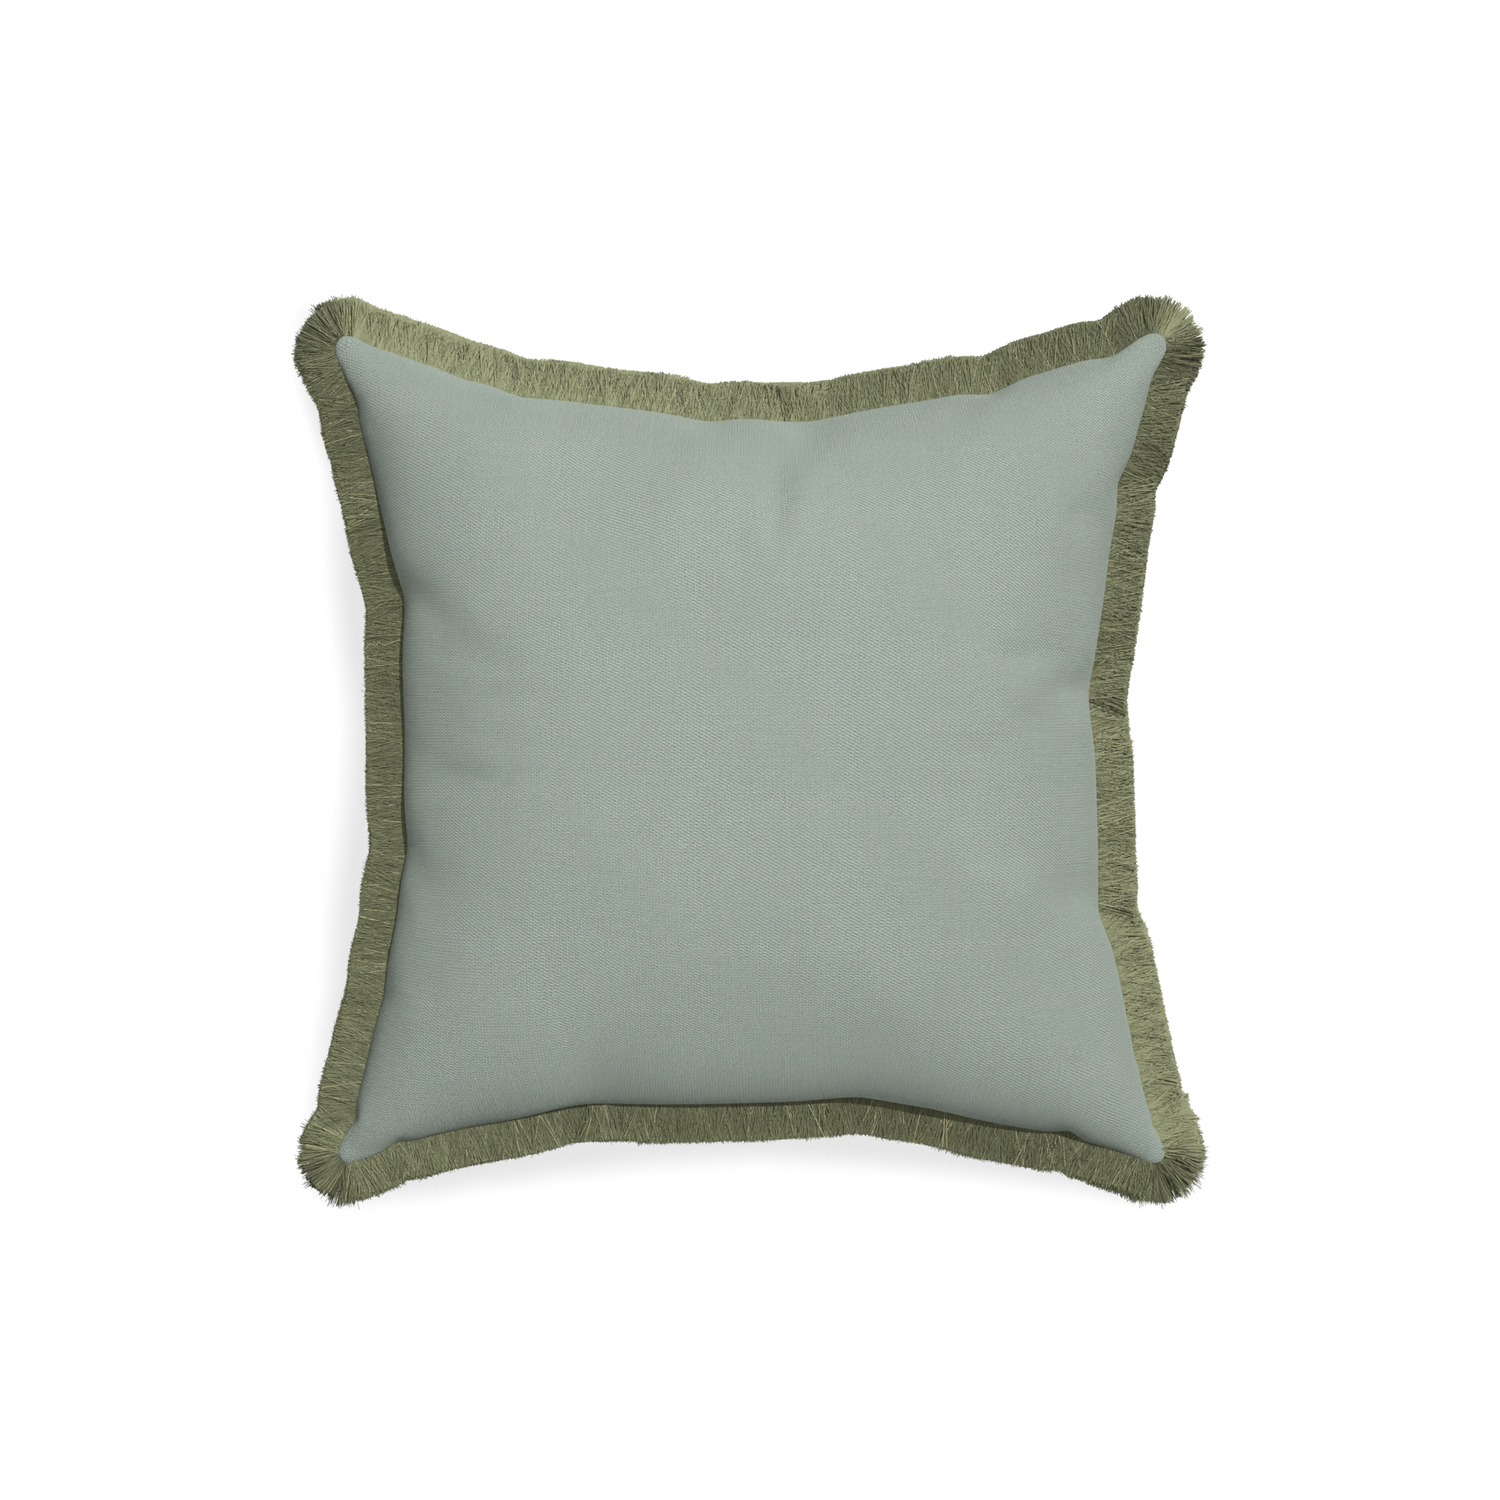 18-square sage custom pillow with sage fringe on white background